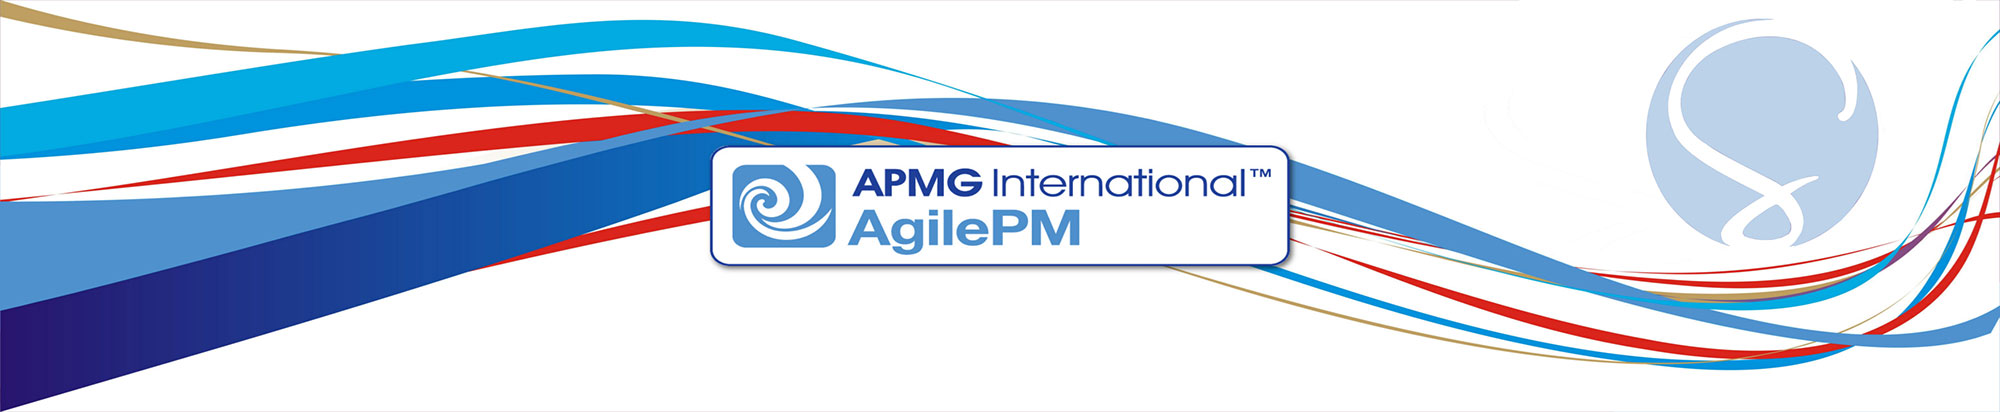 Agile PM Training & Certification